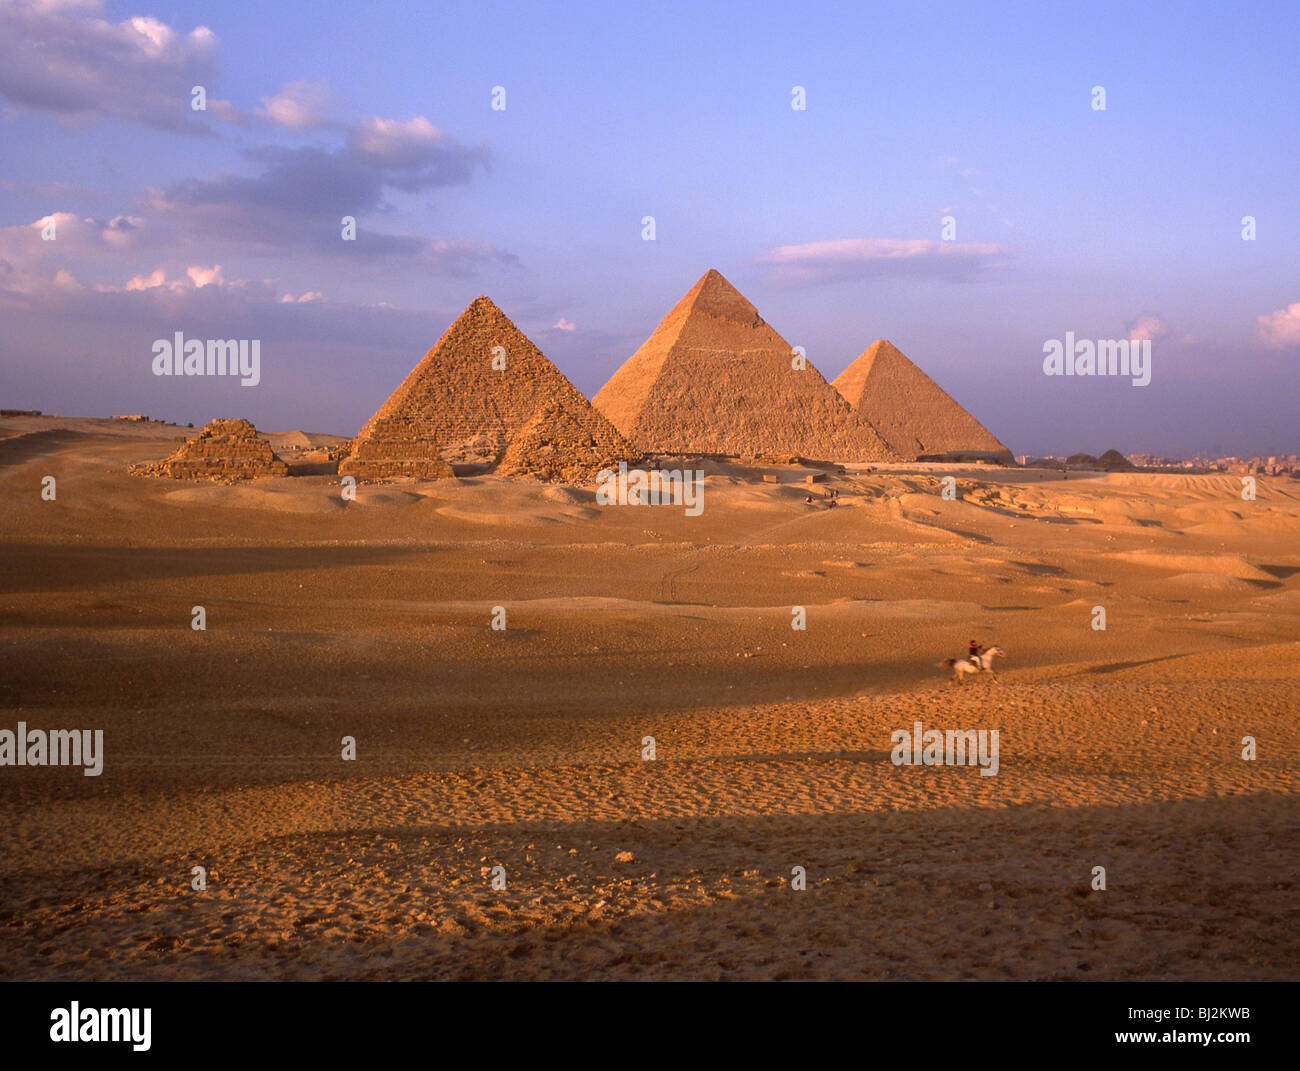 The Great Pyramids of Giza at sunrise, Giza, Giza Governate, Republic of Egypt Stock Photo